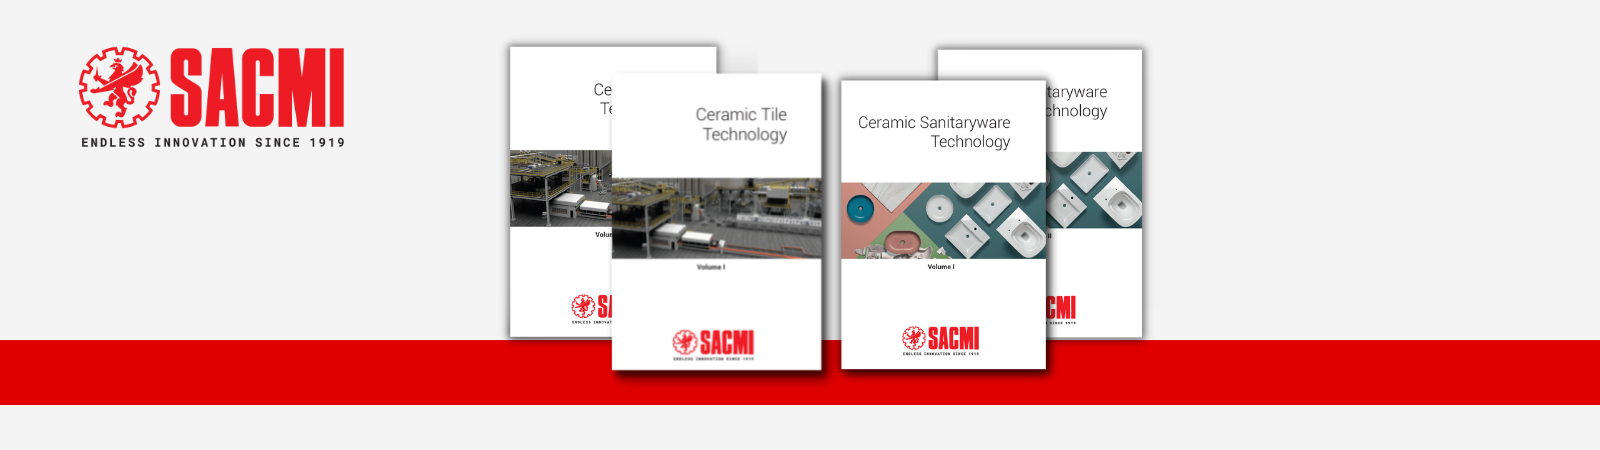 «Training first». SACMI presents its new ceramic technology books 